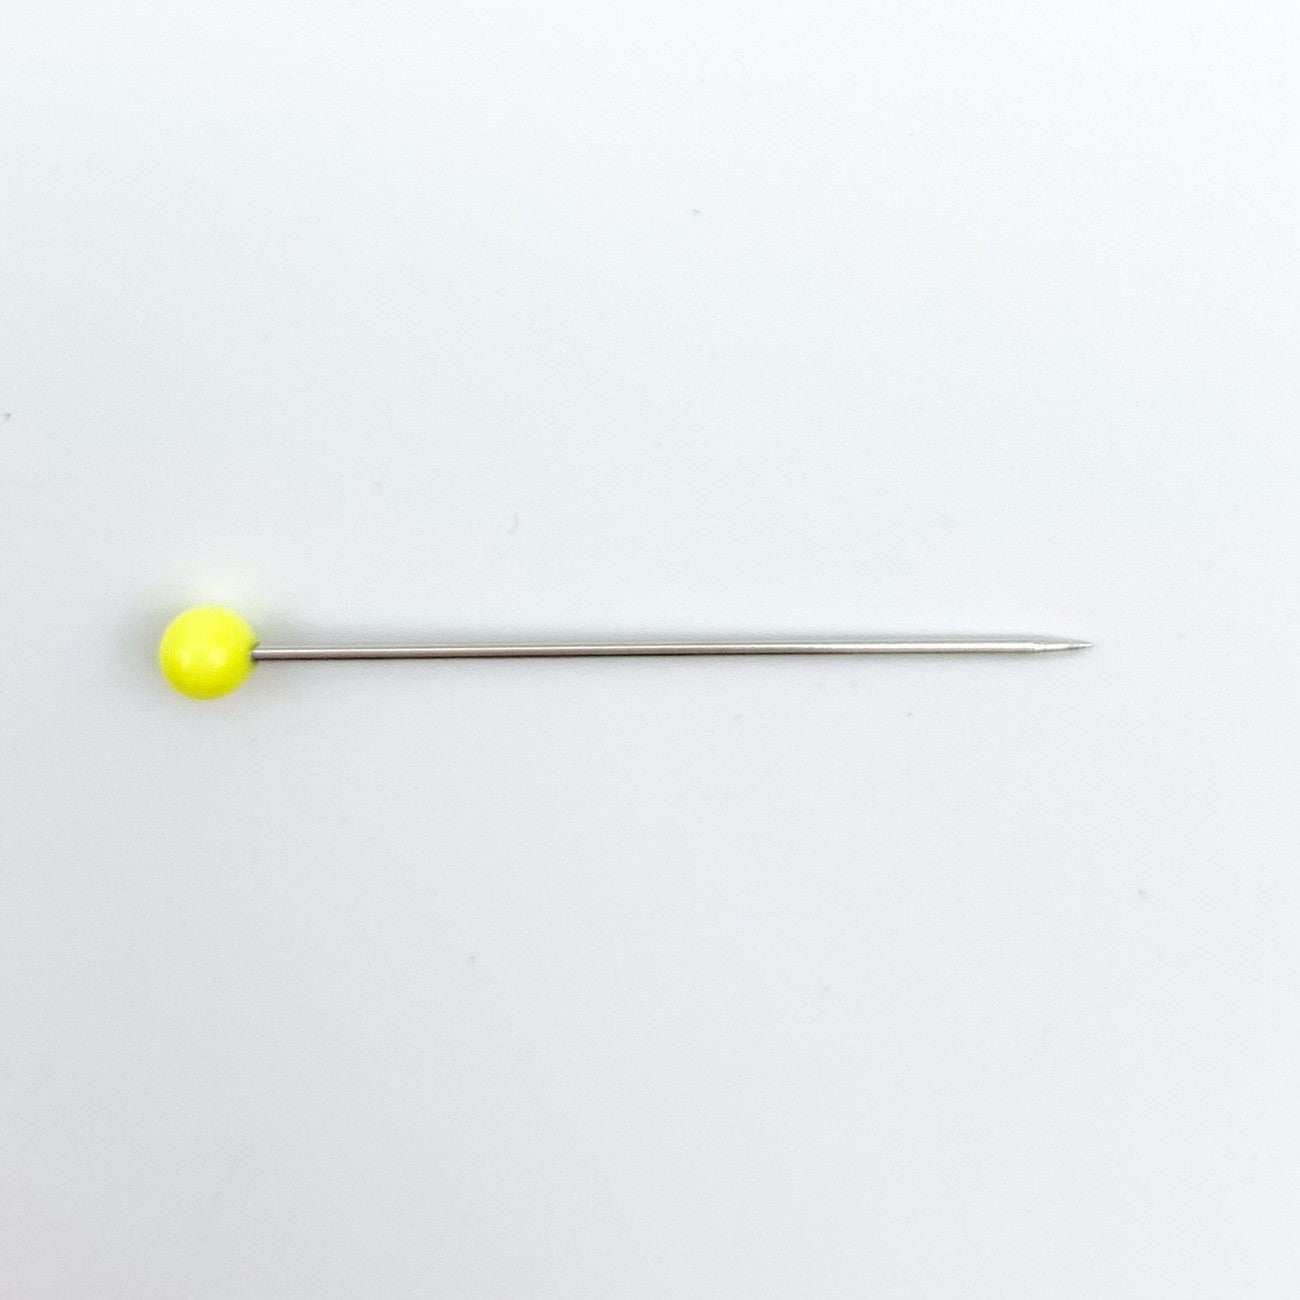 Bohin Glass Head Pins Brimstone Yellow 1-3/16": 80 Murano Glass Head Extra Fine Straight Pins